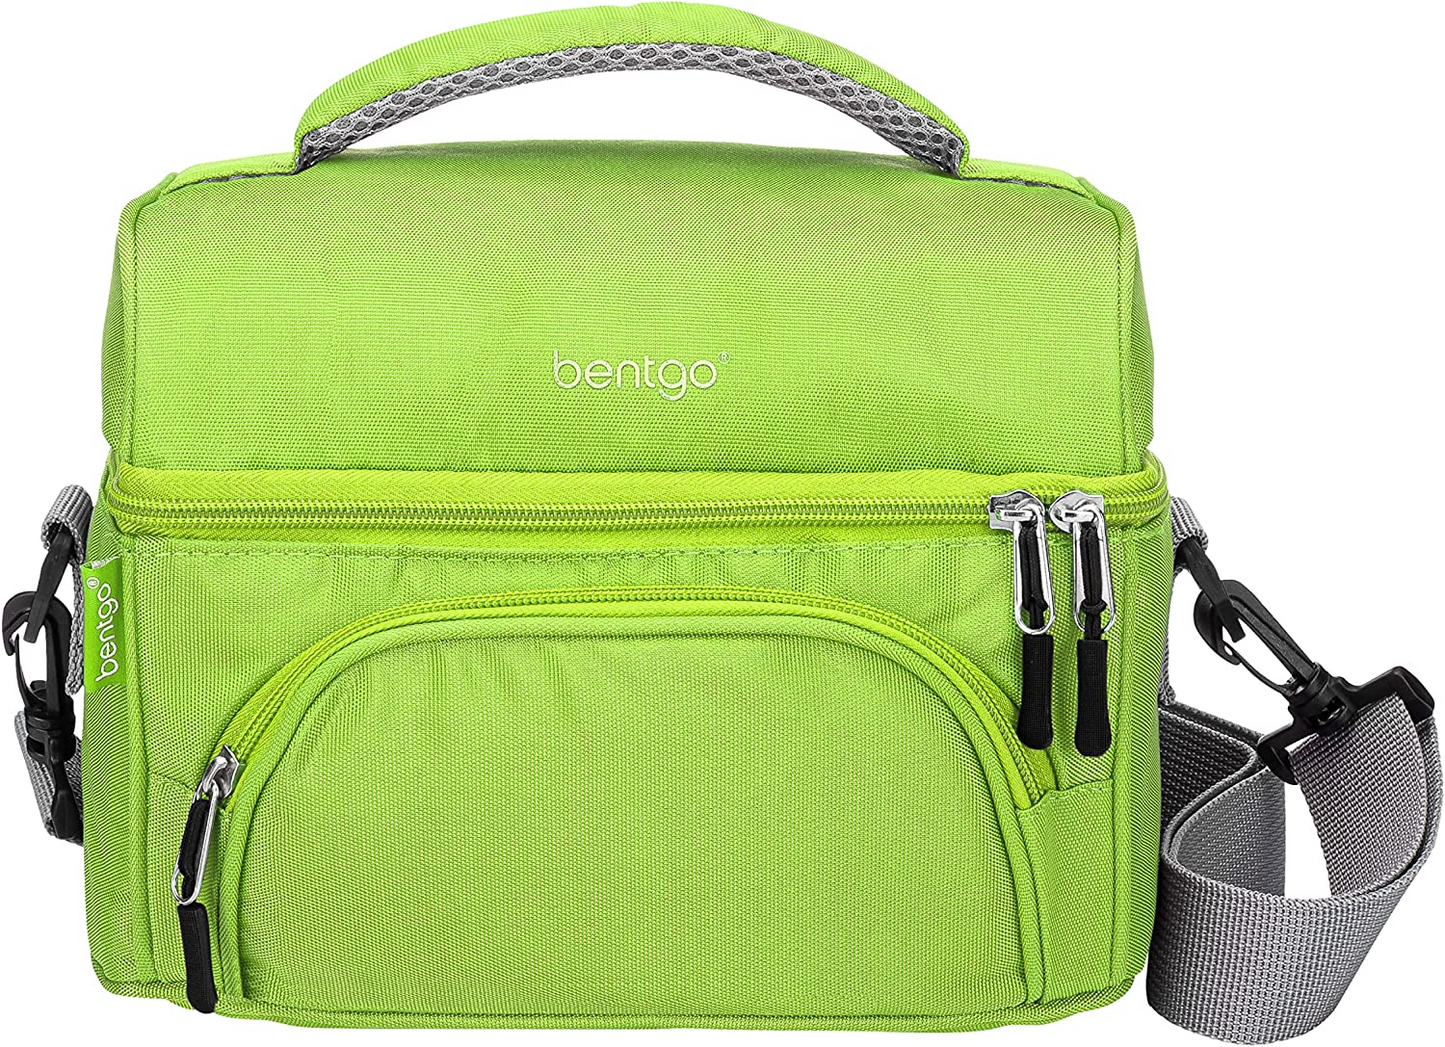 Bentgo Lancheira Deluxe – lancheira durável e isolada com bolso externo com zíper